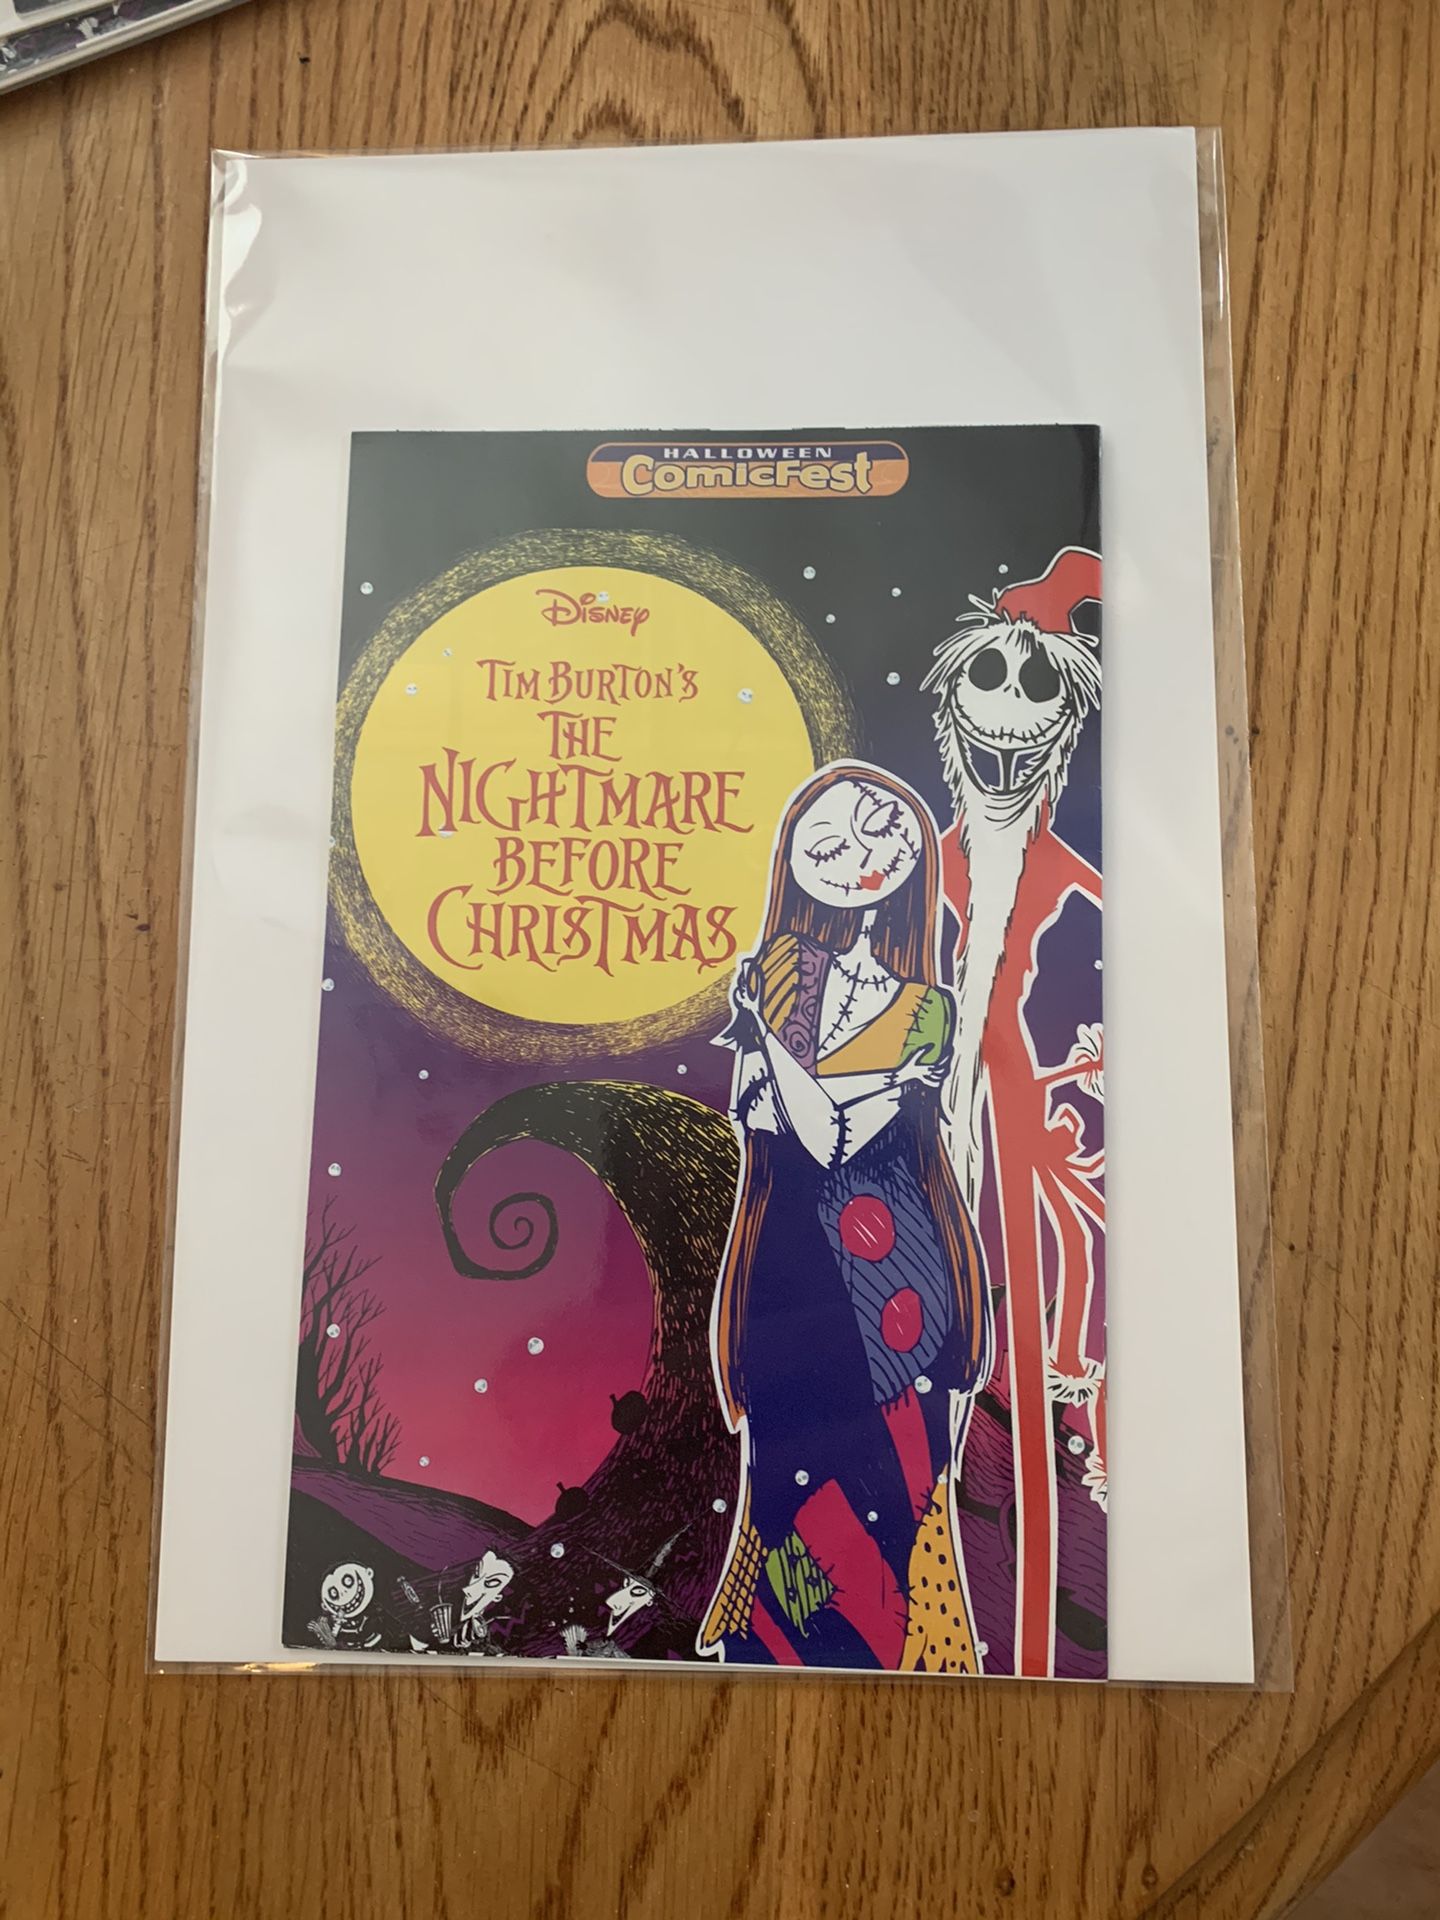 The Nightmare Before Christmas Halloween Comicfest Mini Comic Book